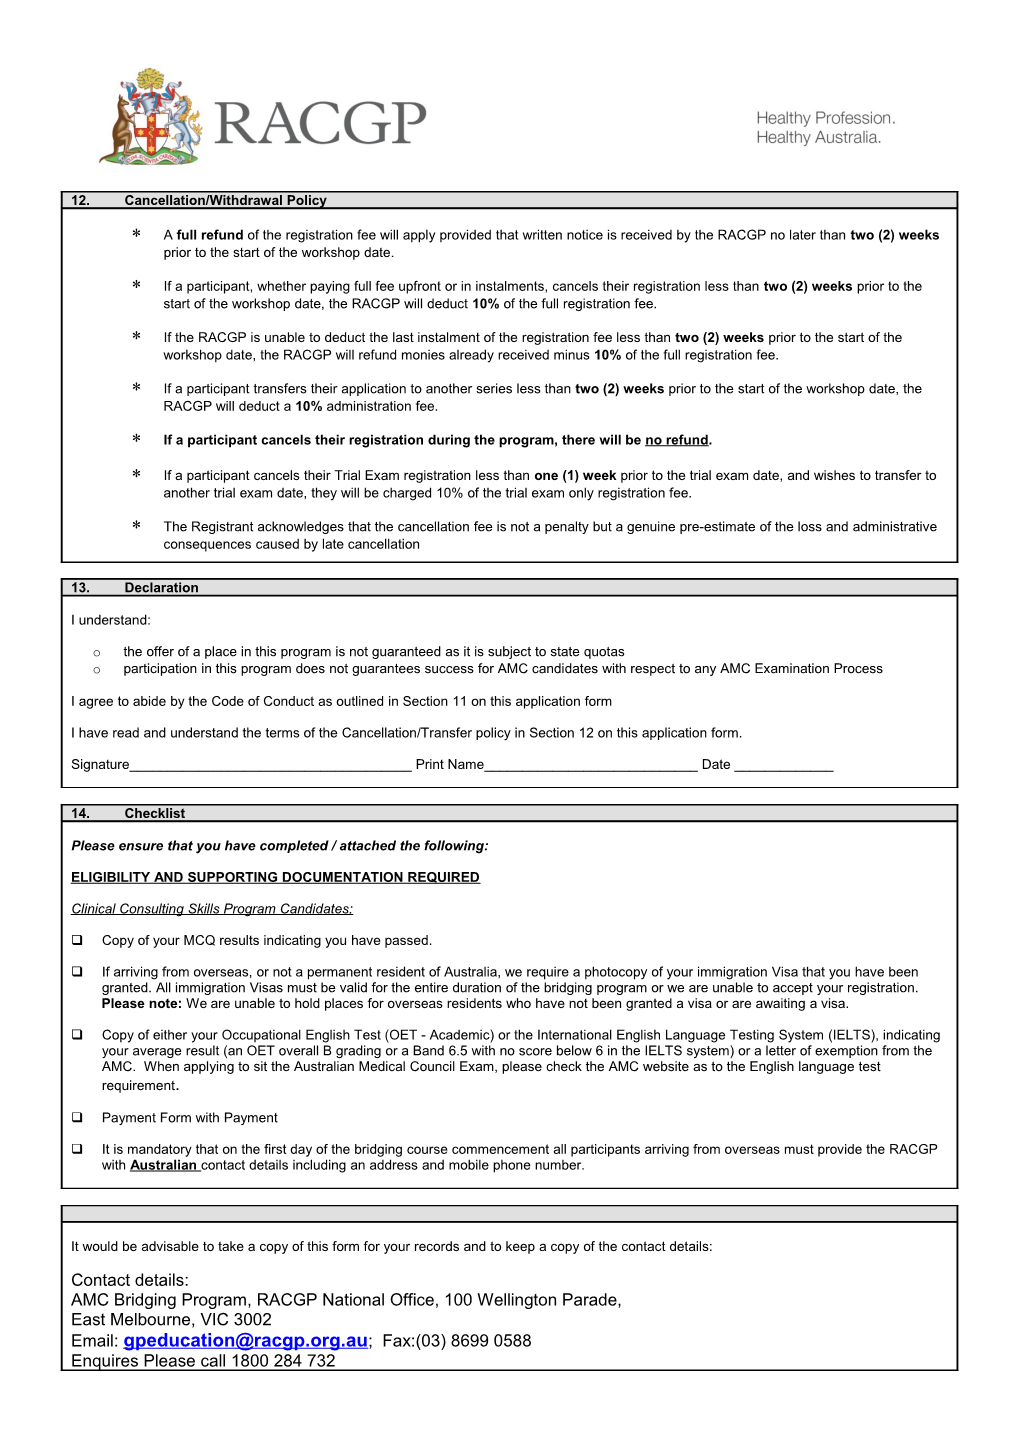 AMC Clinical Bridging Course Application Form